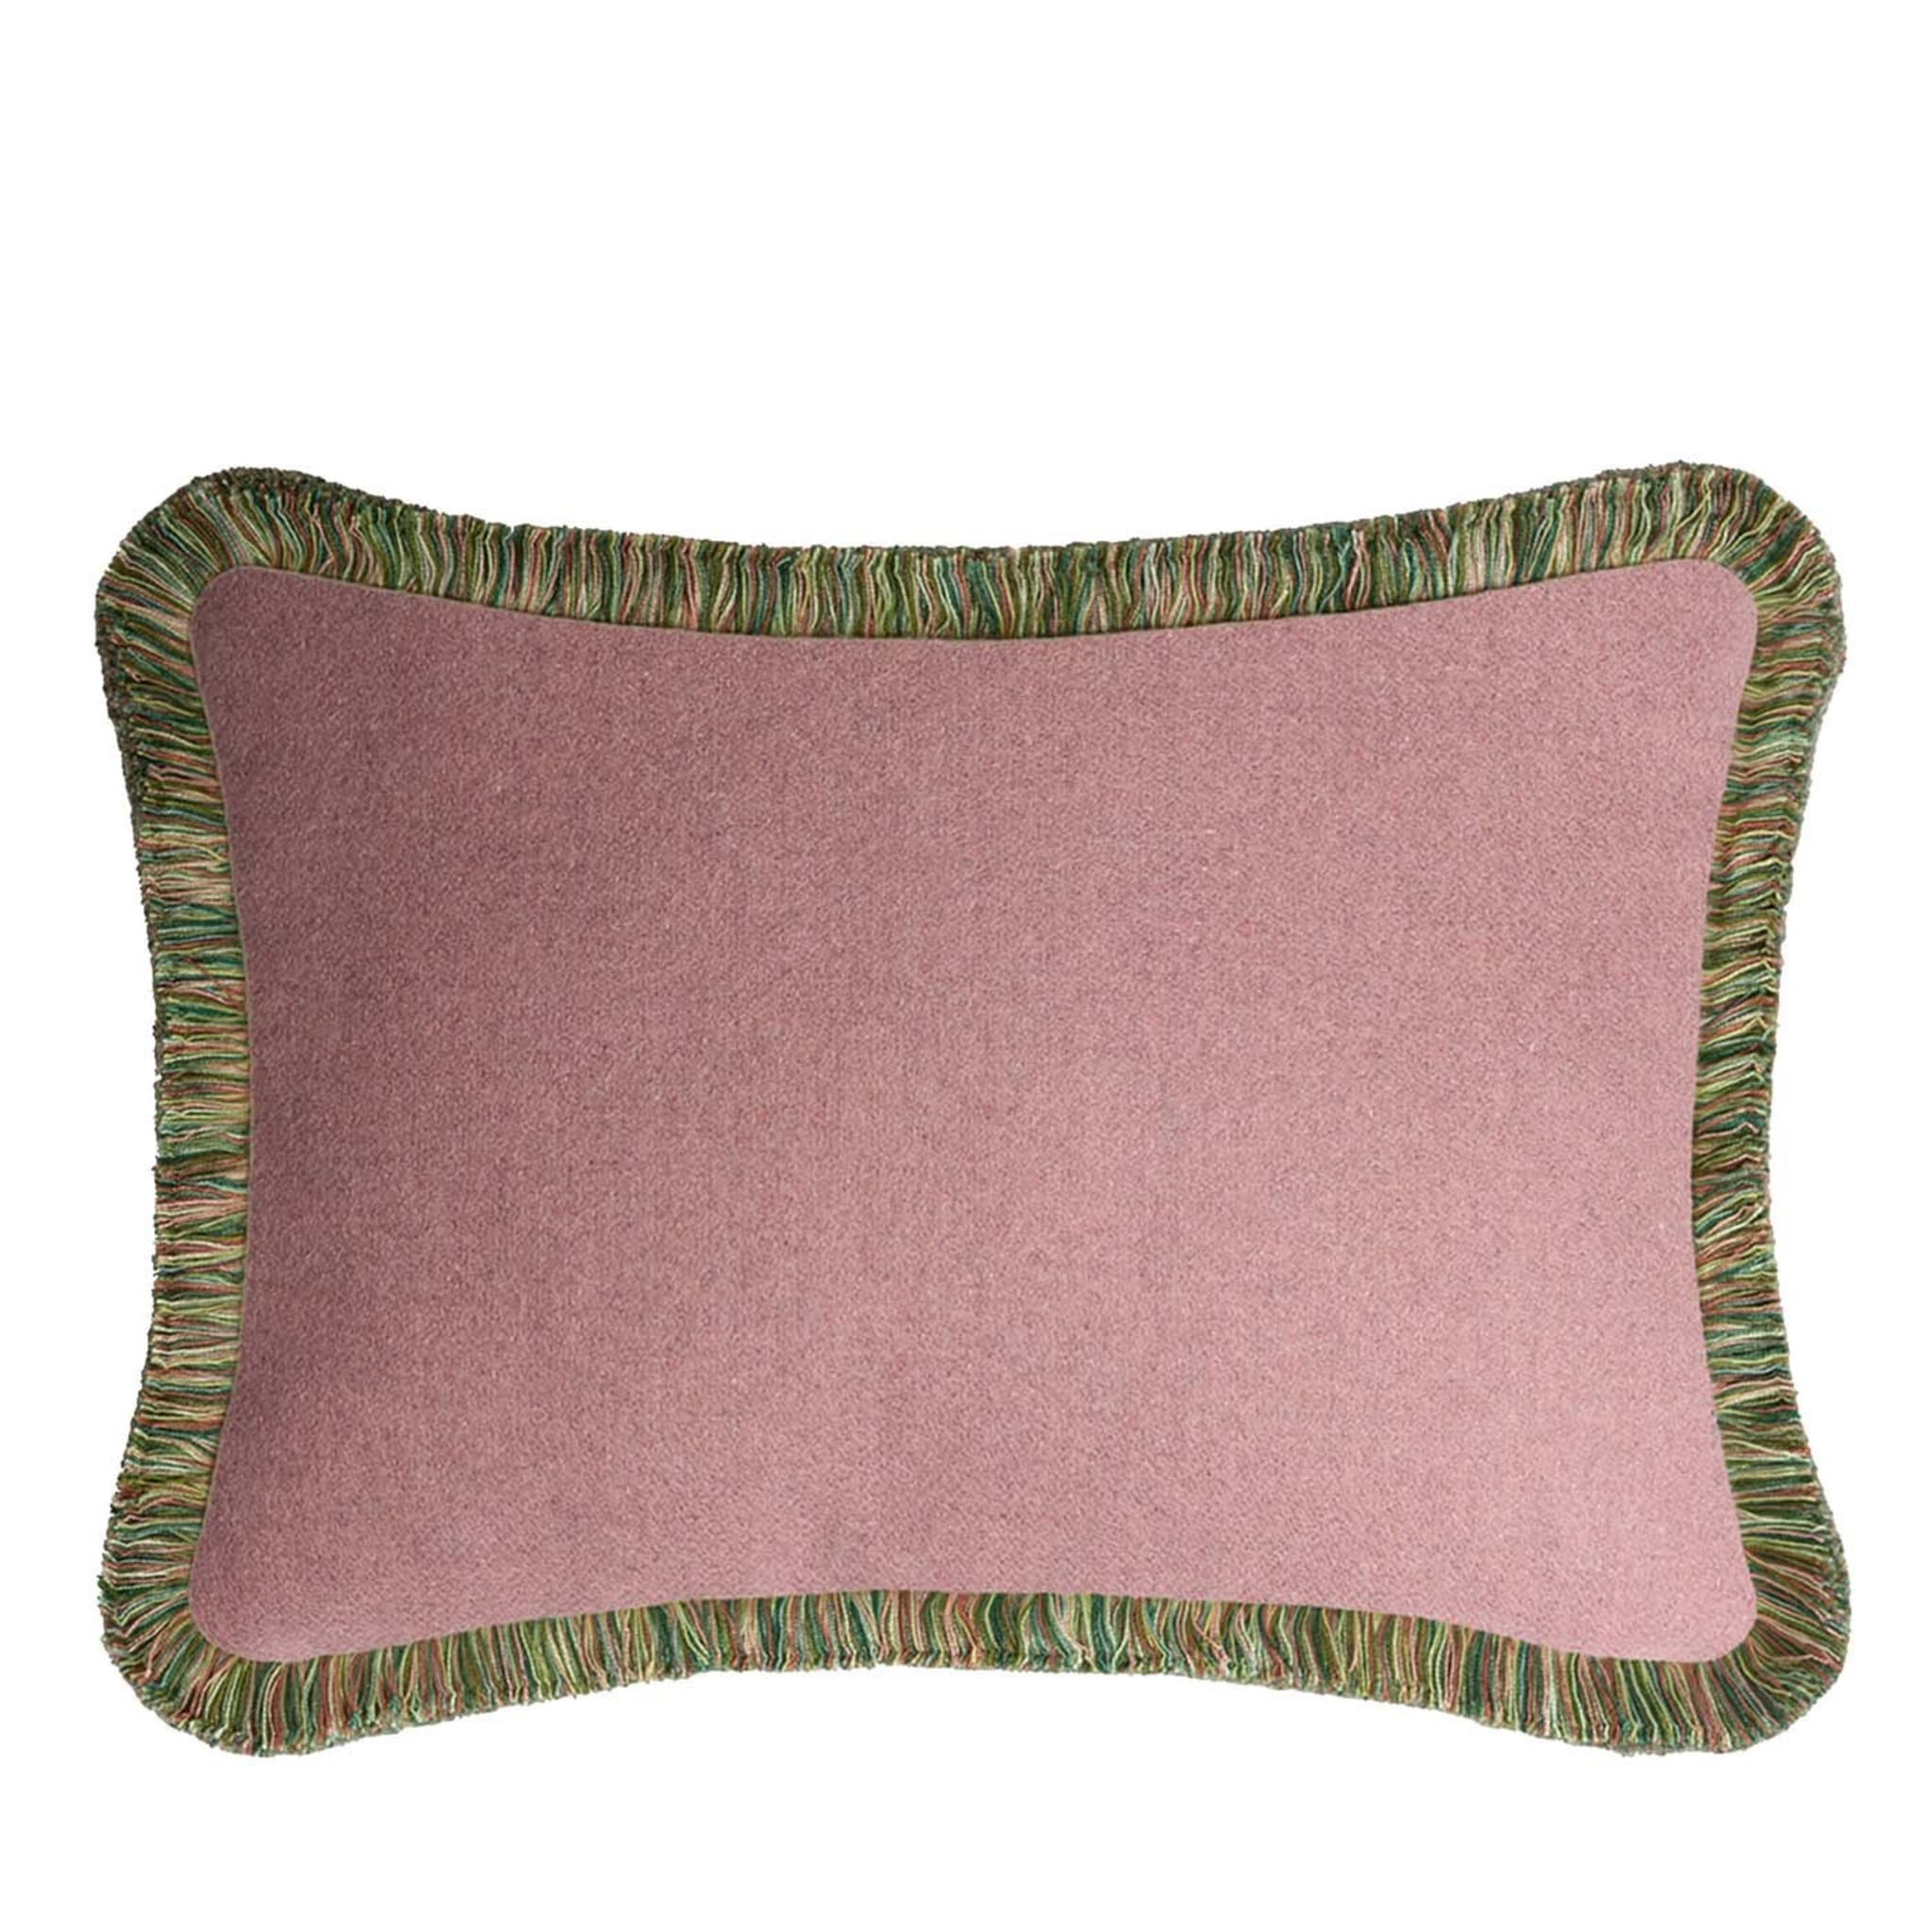 Svezia Pink Rectangular Cushion - Main view